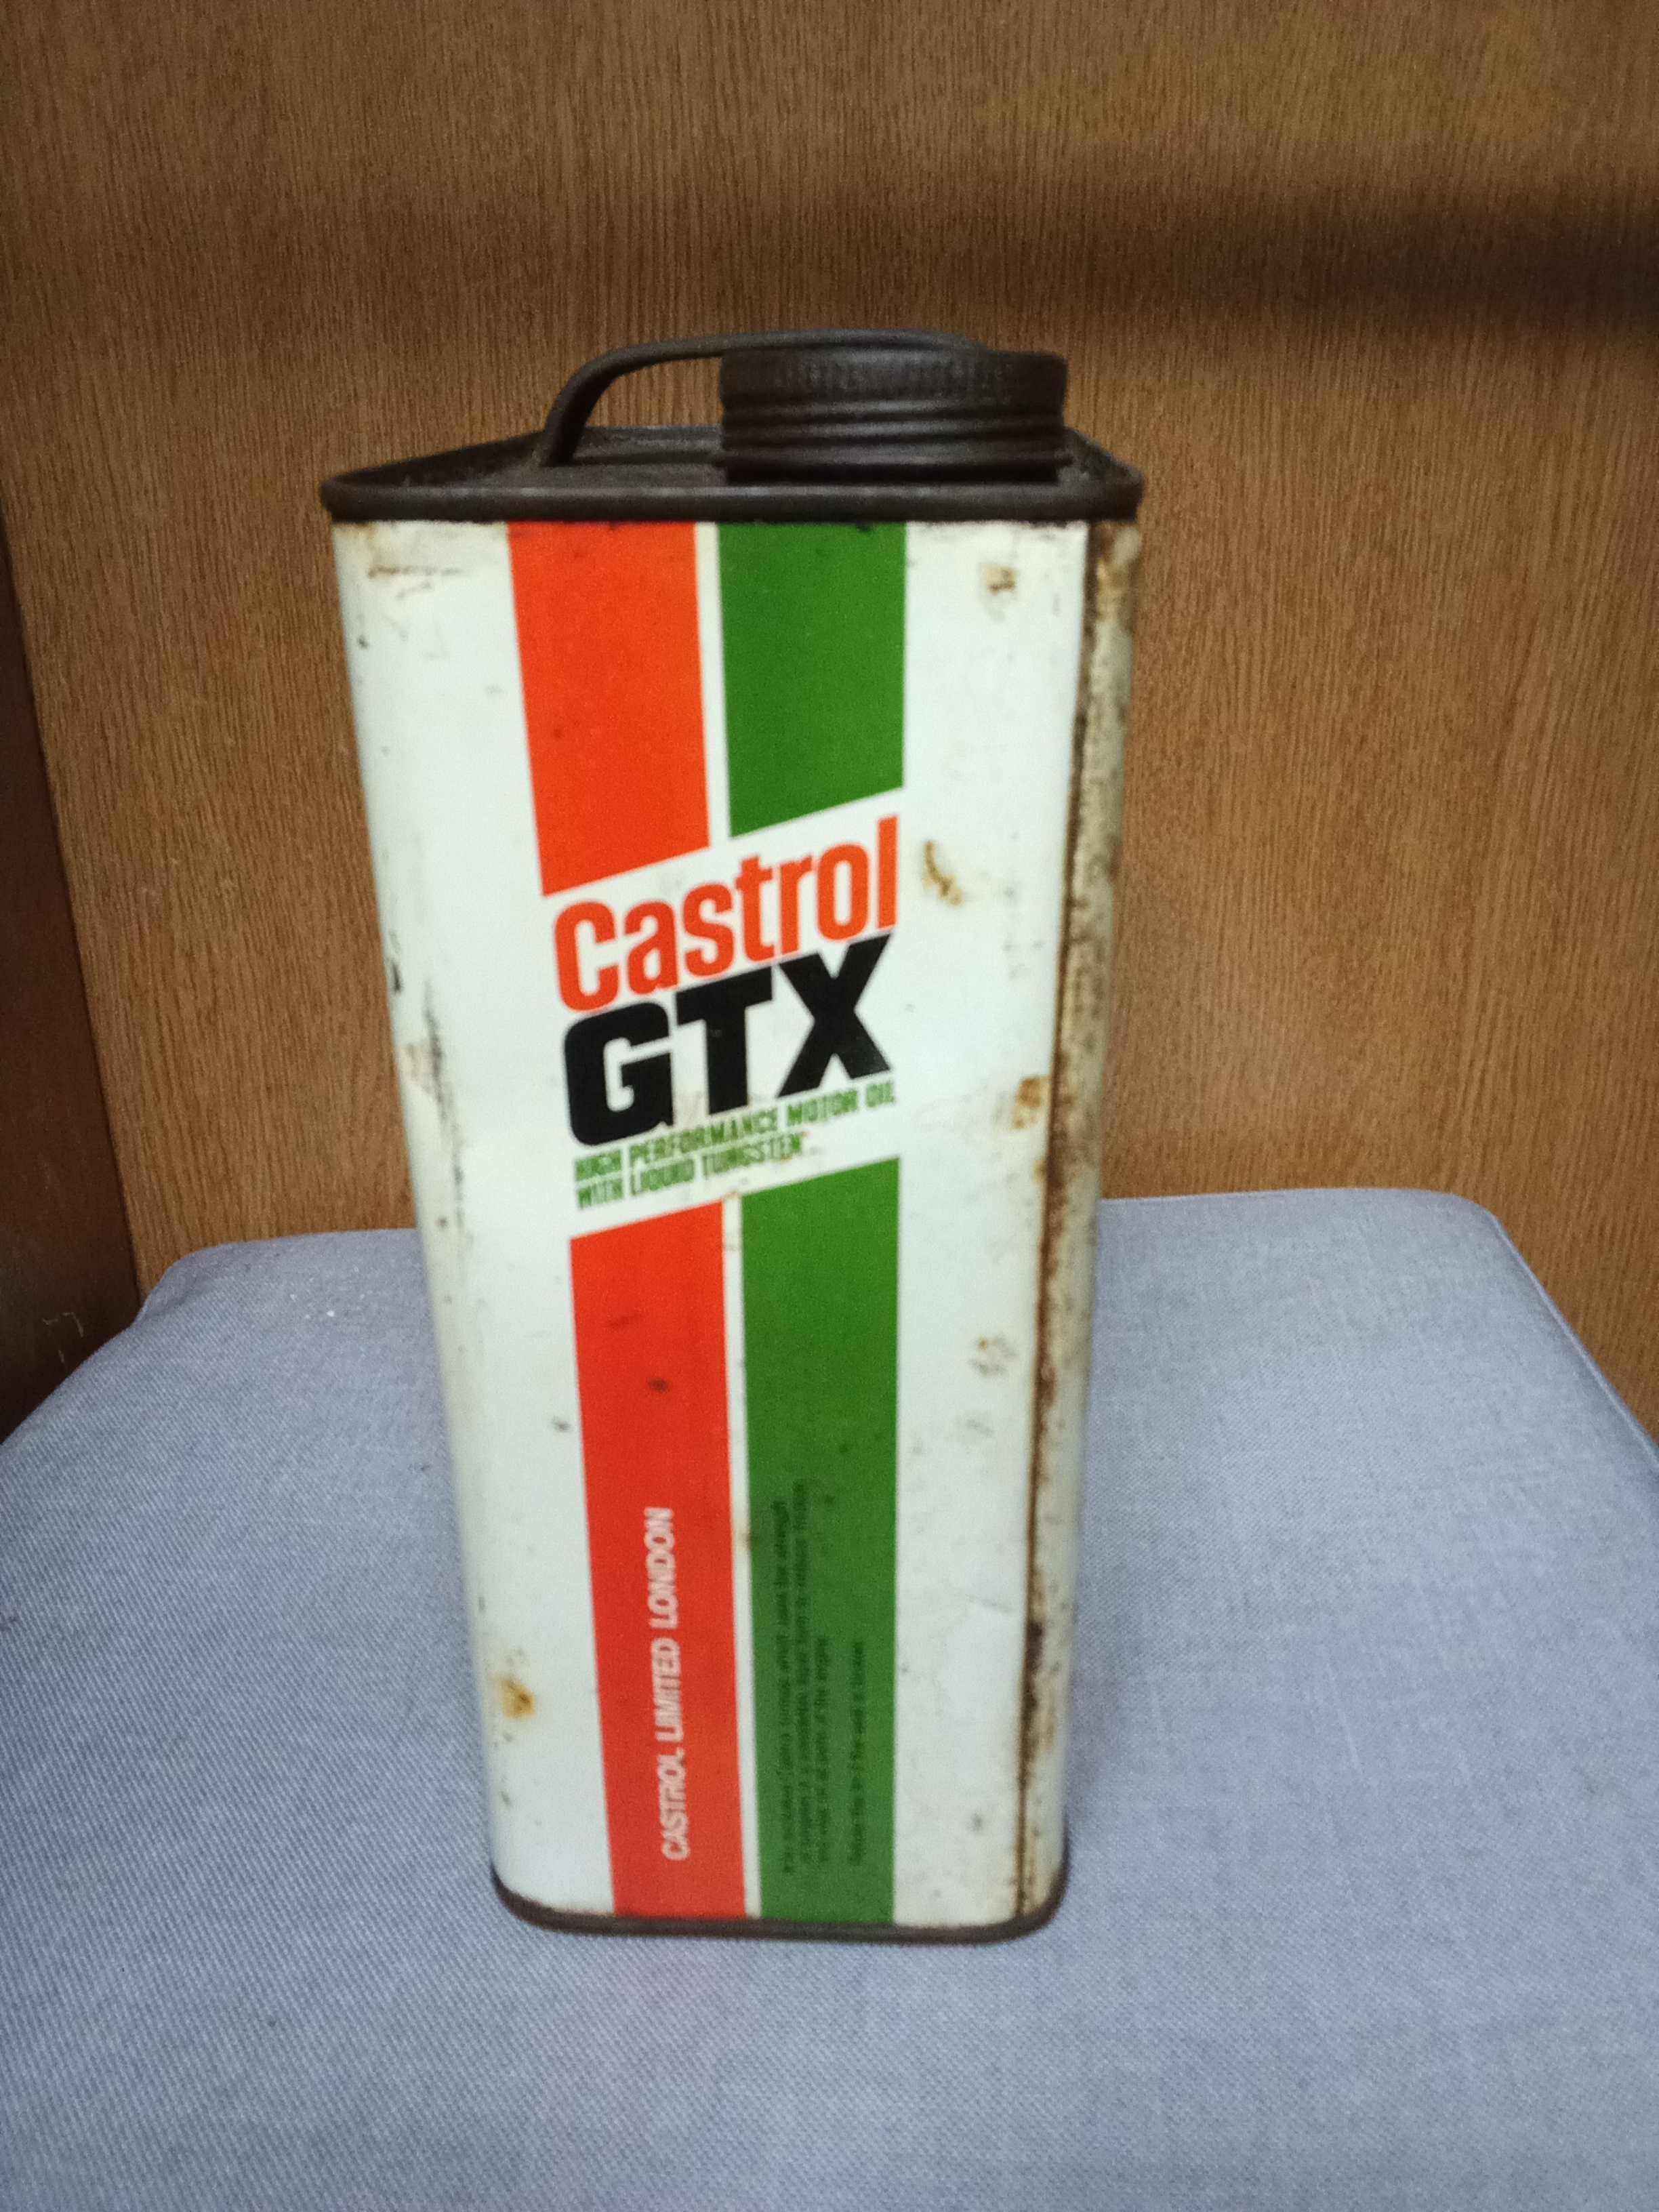 Lata de óleo Castrol Gtx vintage